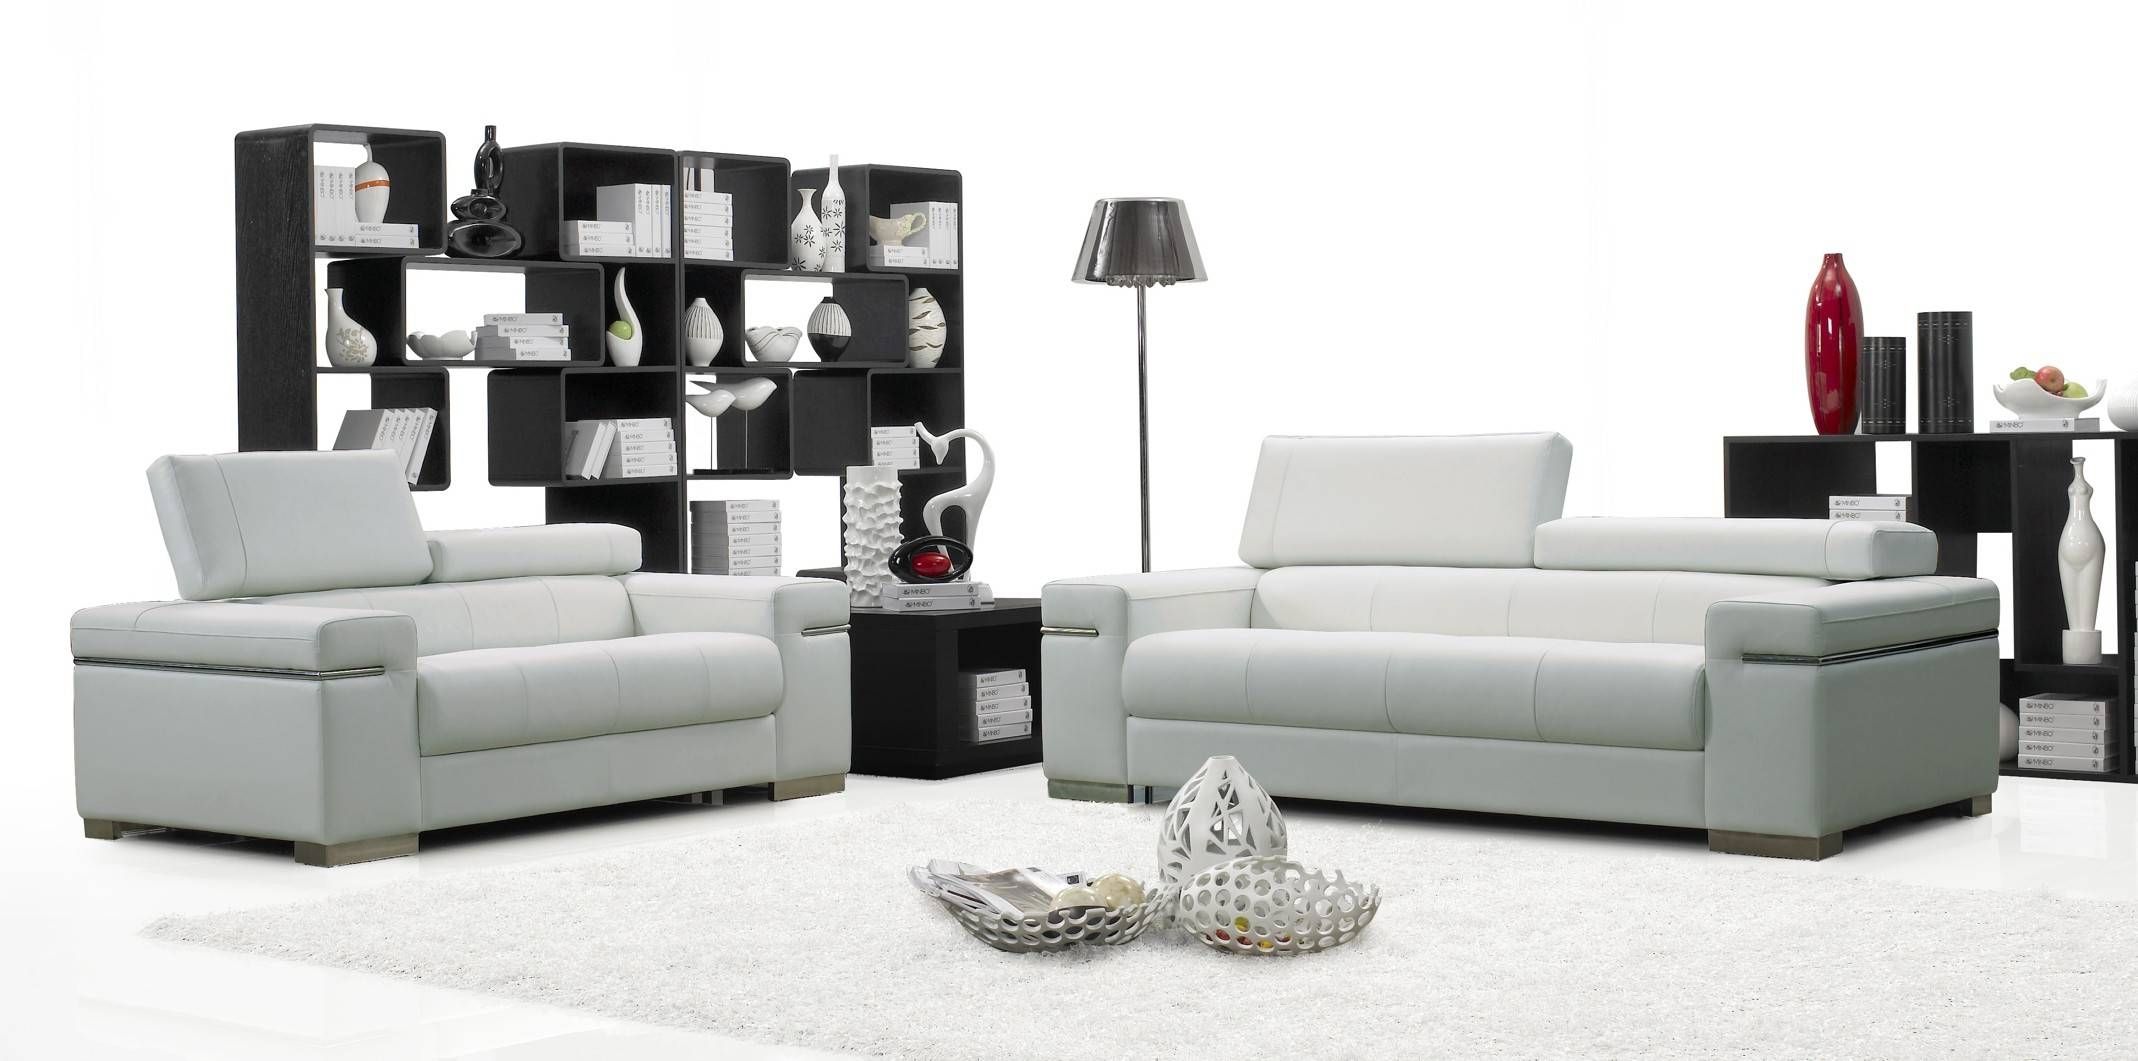 Sofa Contemporary Furniture Design Fair Ideas Decor Stunning In Contemporary Sofa Chairs (View 12 of 15)